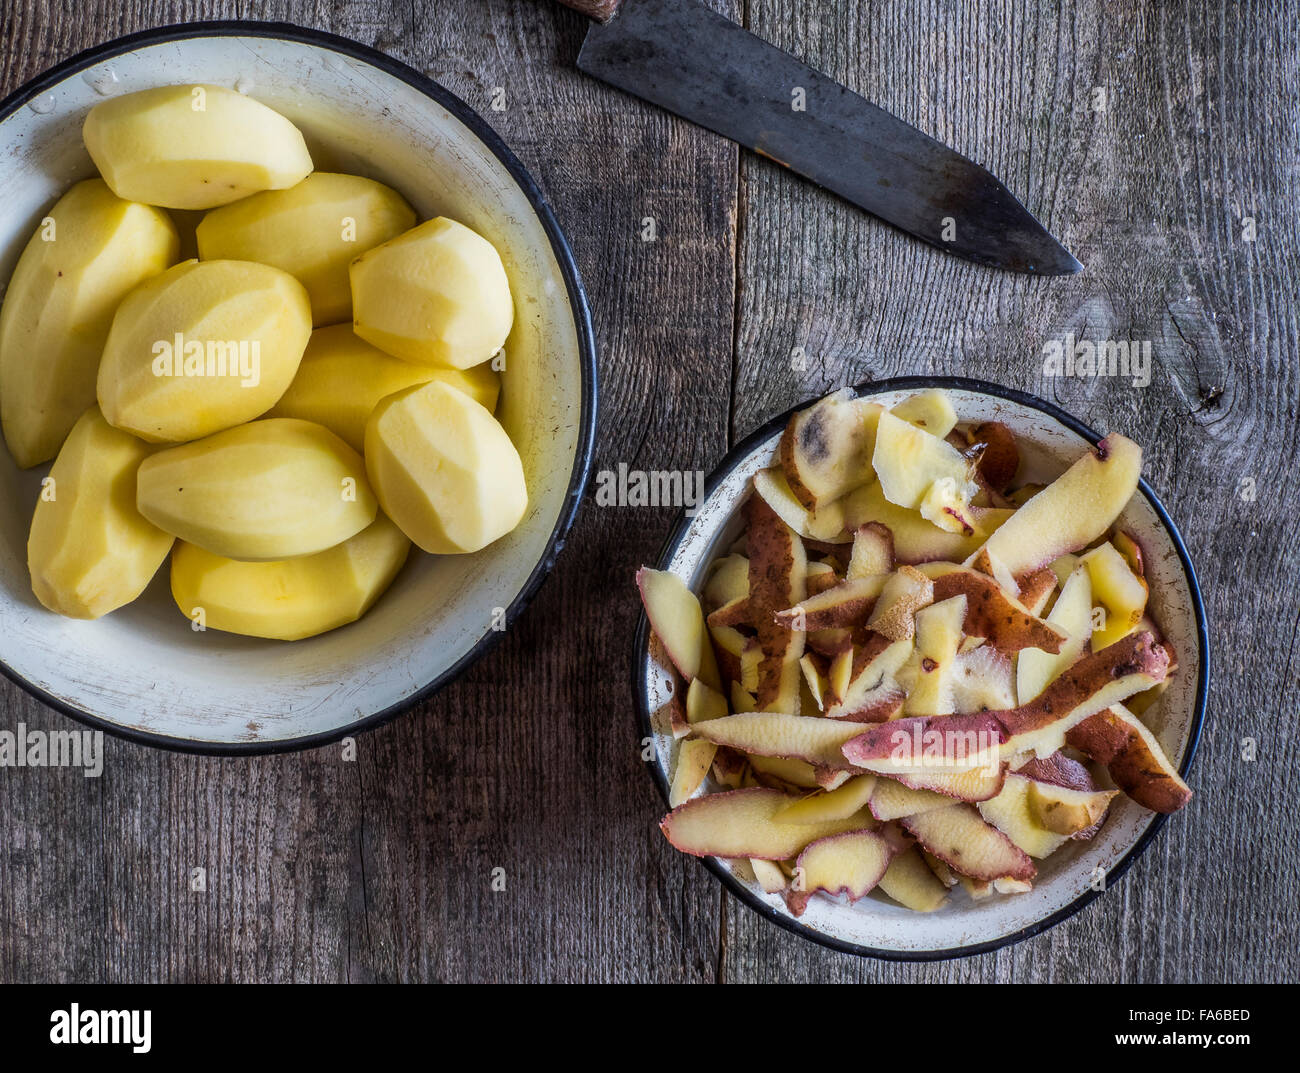 https://c8.alamy.com/comp/FA6BED/peeled-potatoes-potato-peelings-and-knife-on-table-FA6BED.jpg